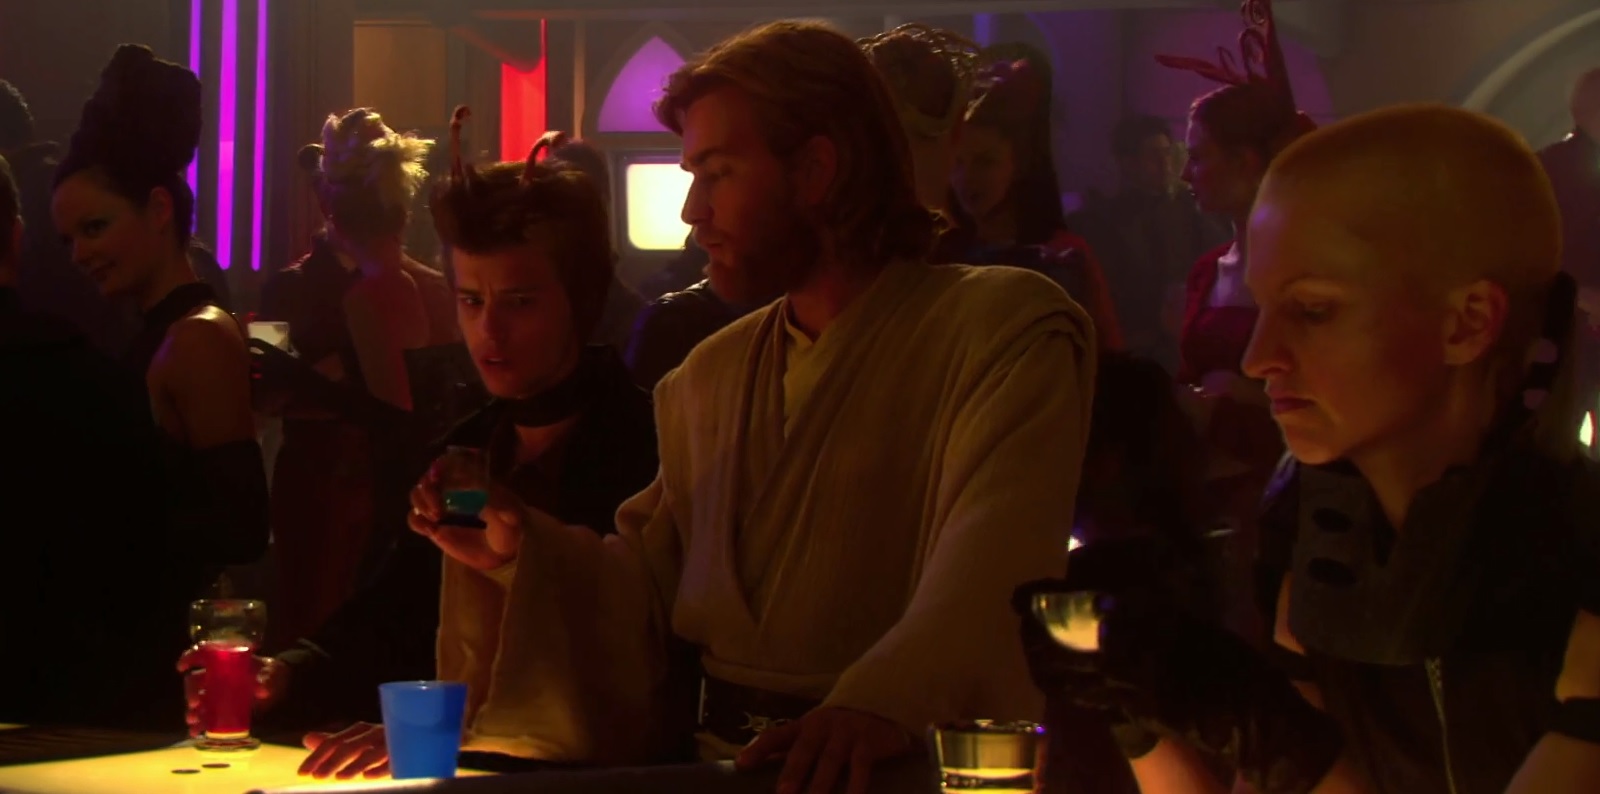 http://www.unleashthefanboy.com/wp-content/uploads/2015/12/Star-Wars-Drinking-1.jpg